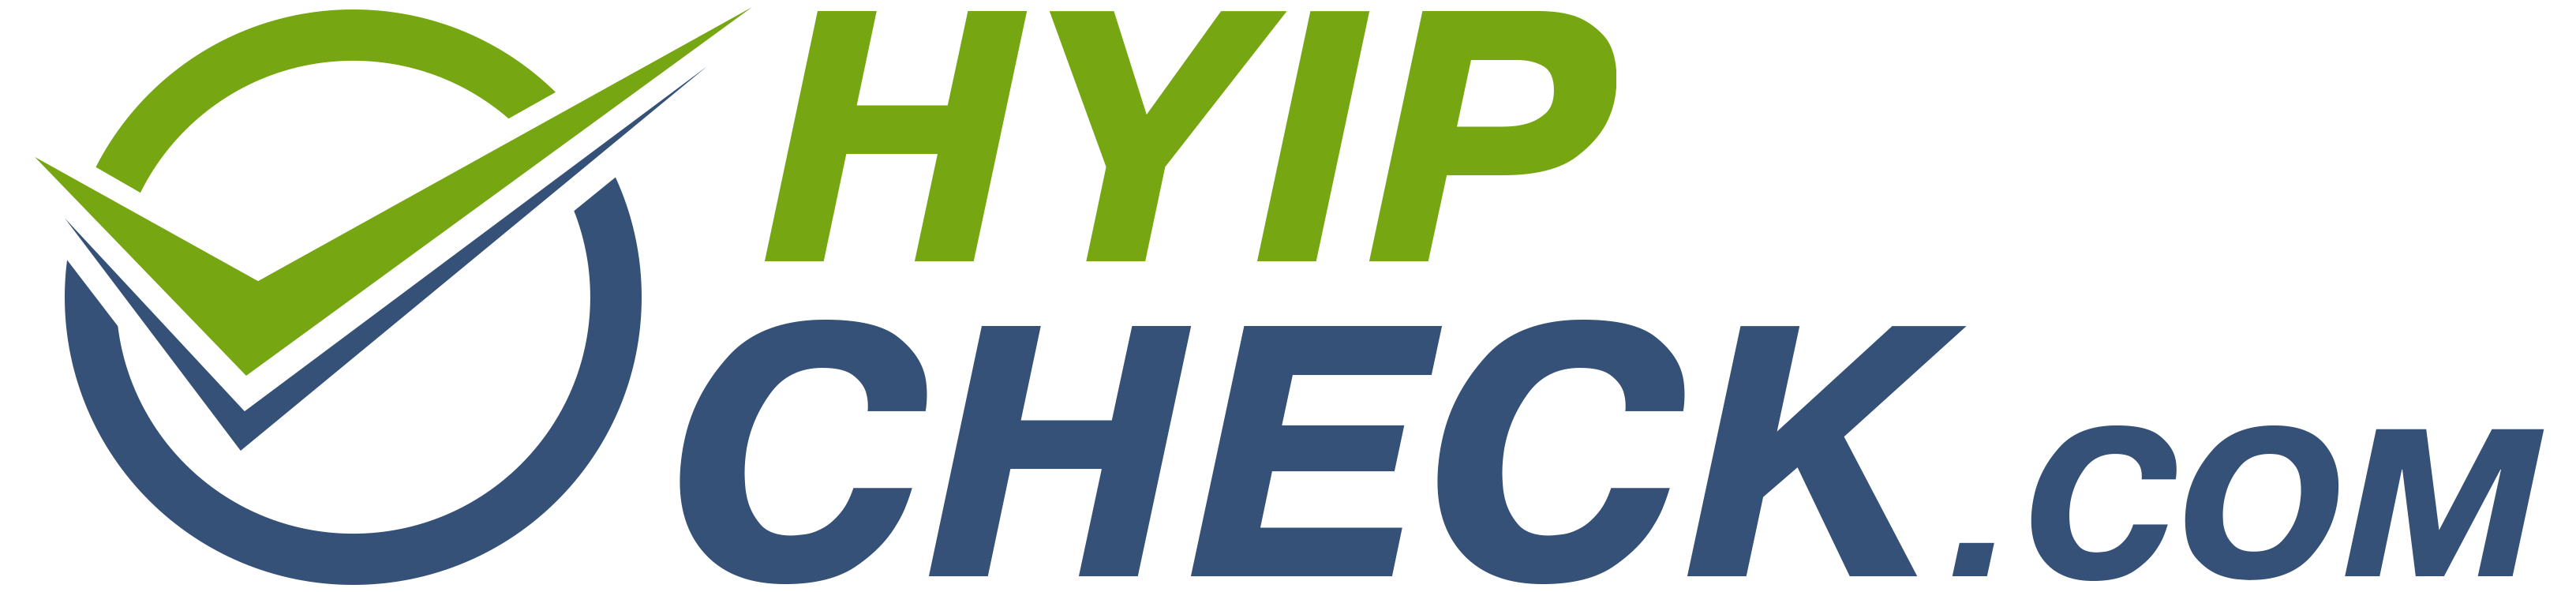 HYIP CHECK - логотип сайта